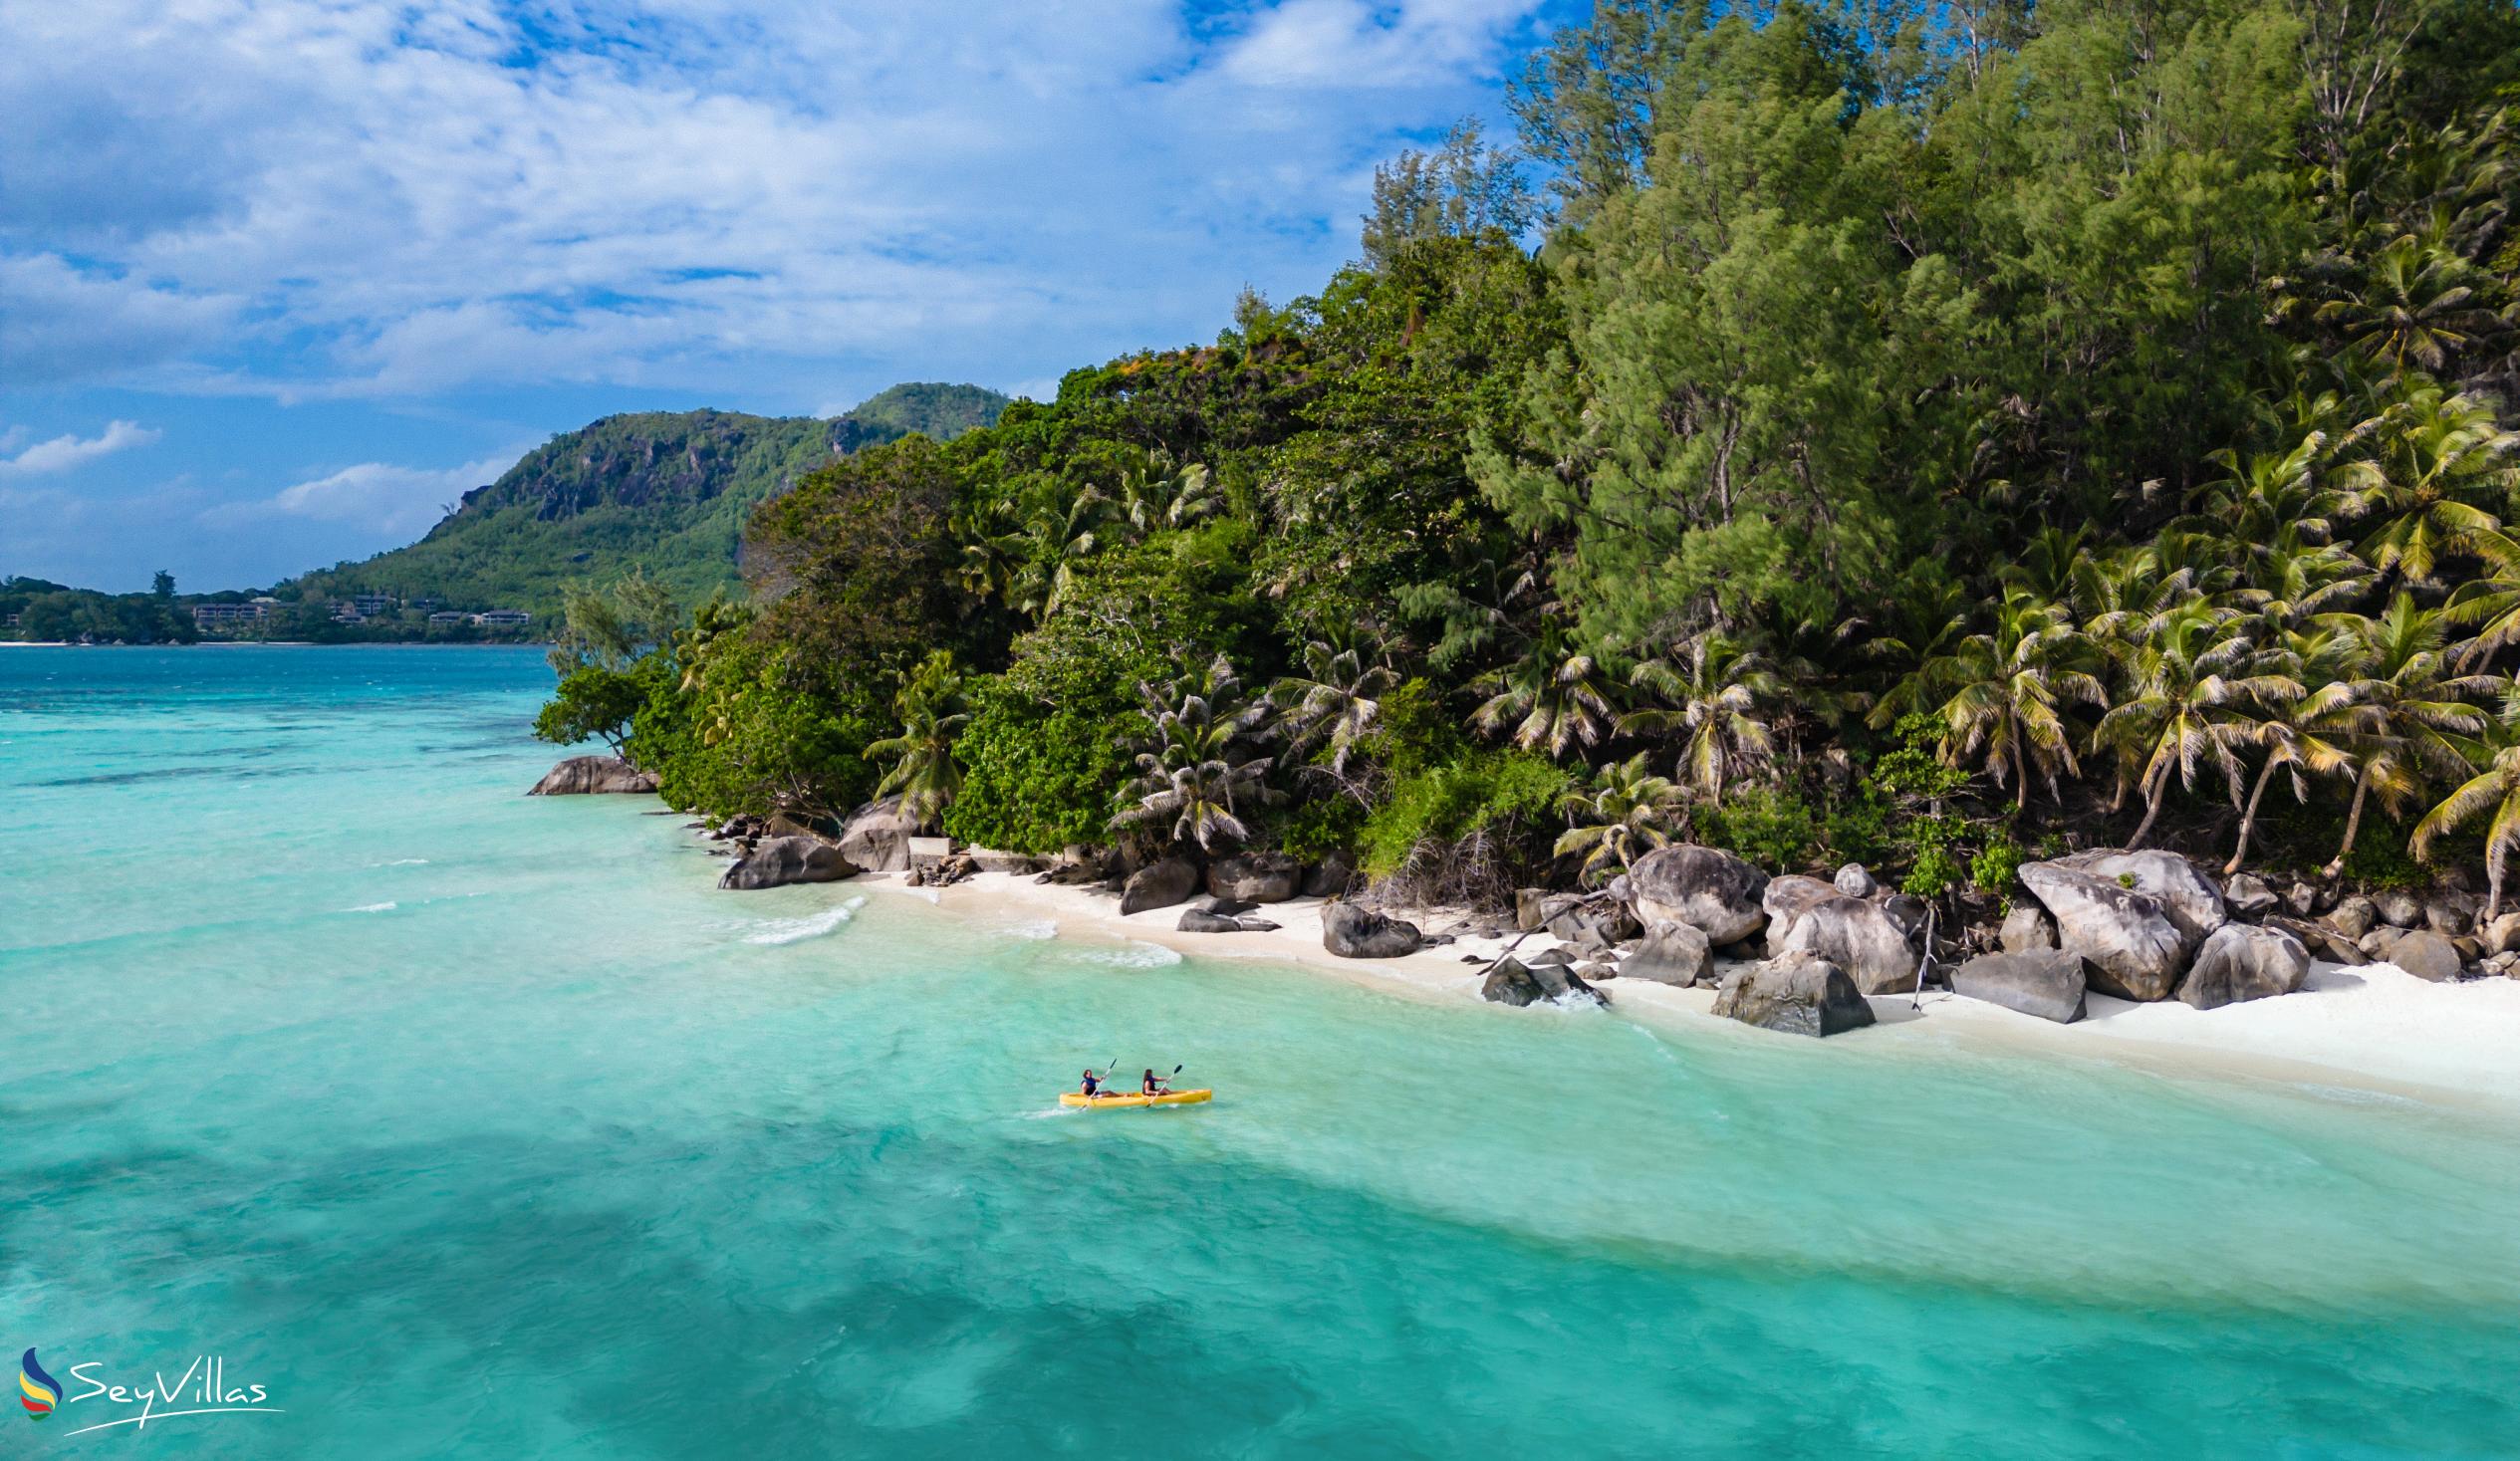 Photo 11: JA Enchanted Island Resort - Location - Round Island (Seychelles)